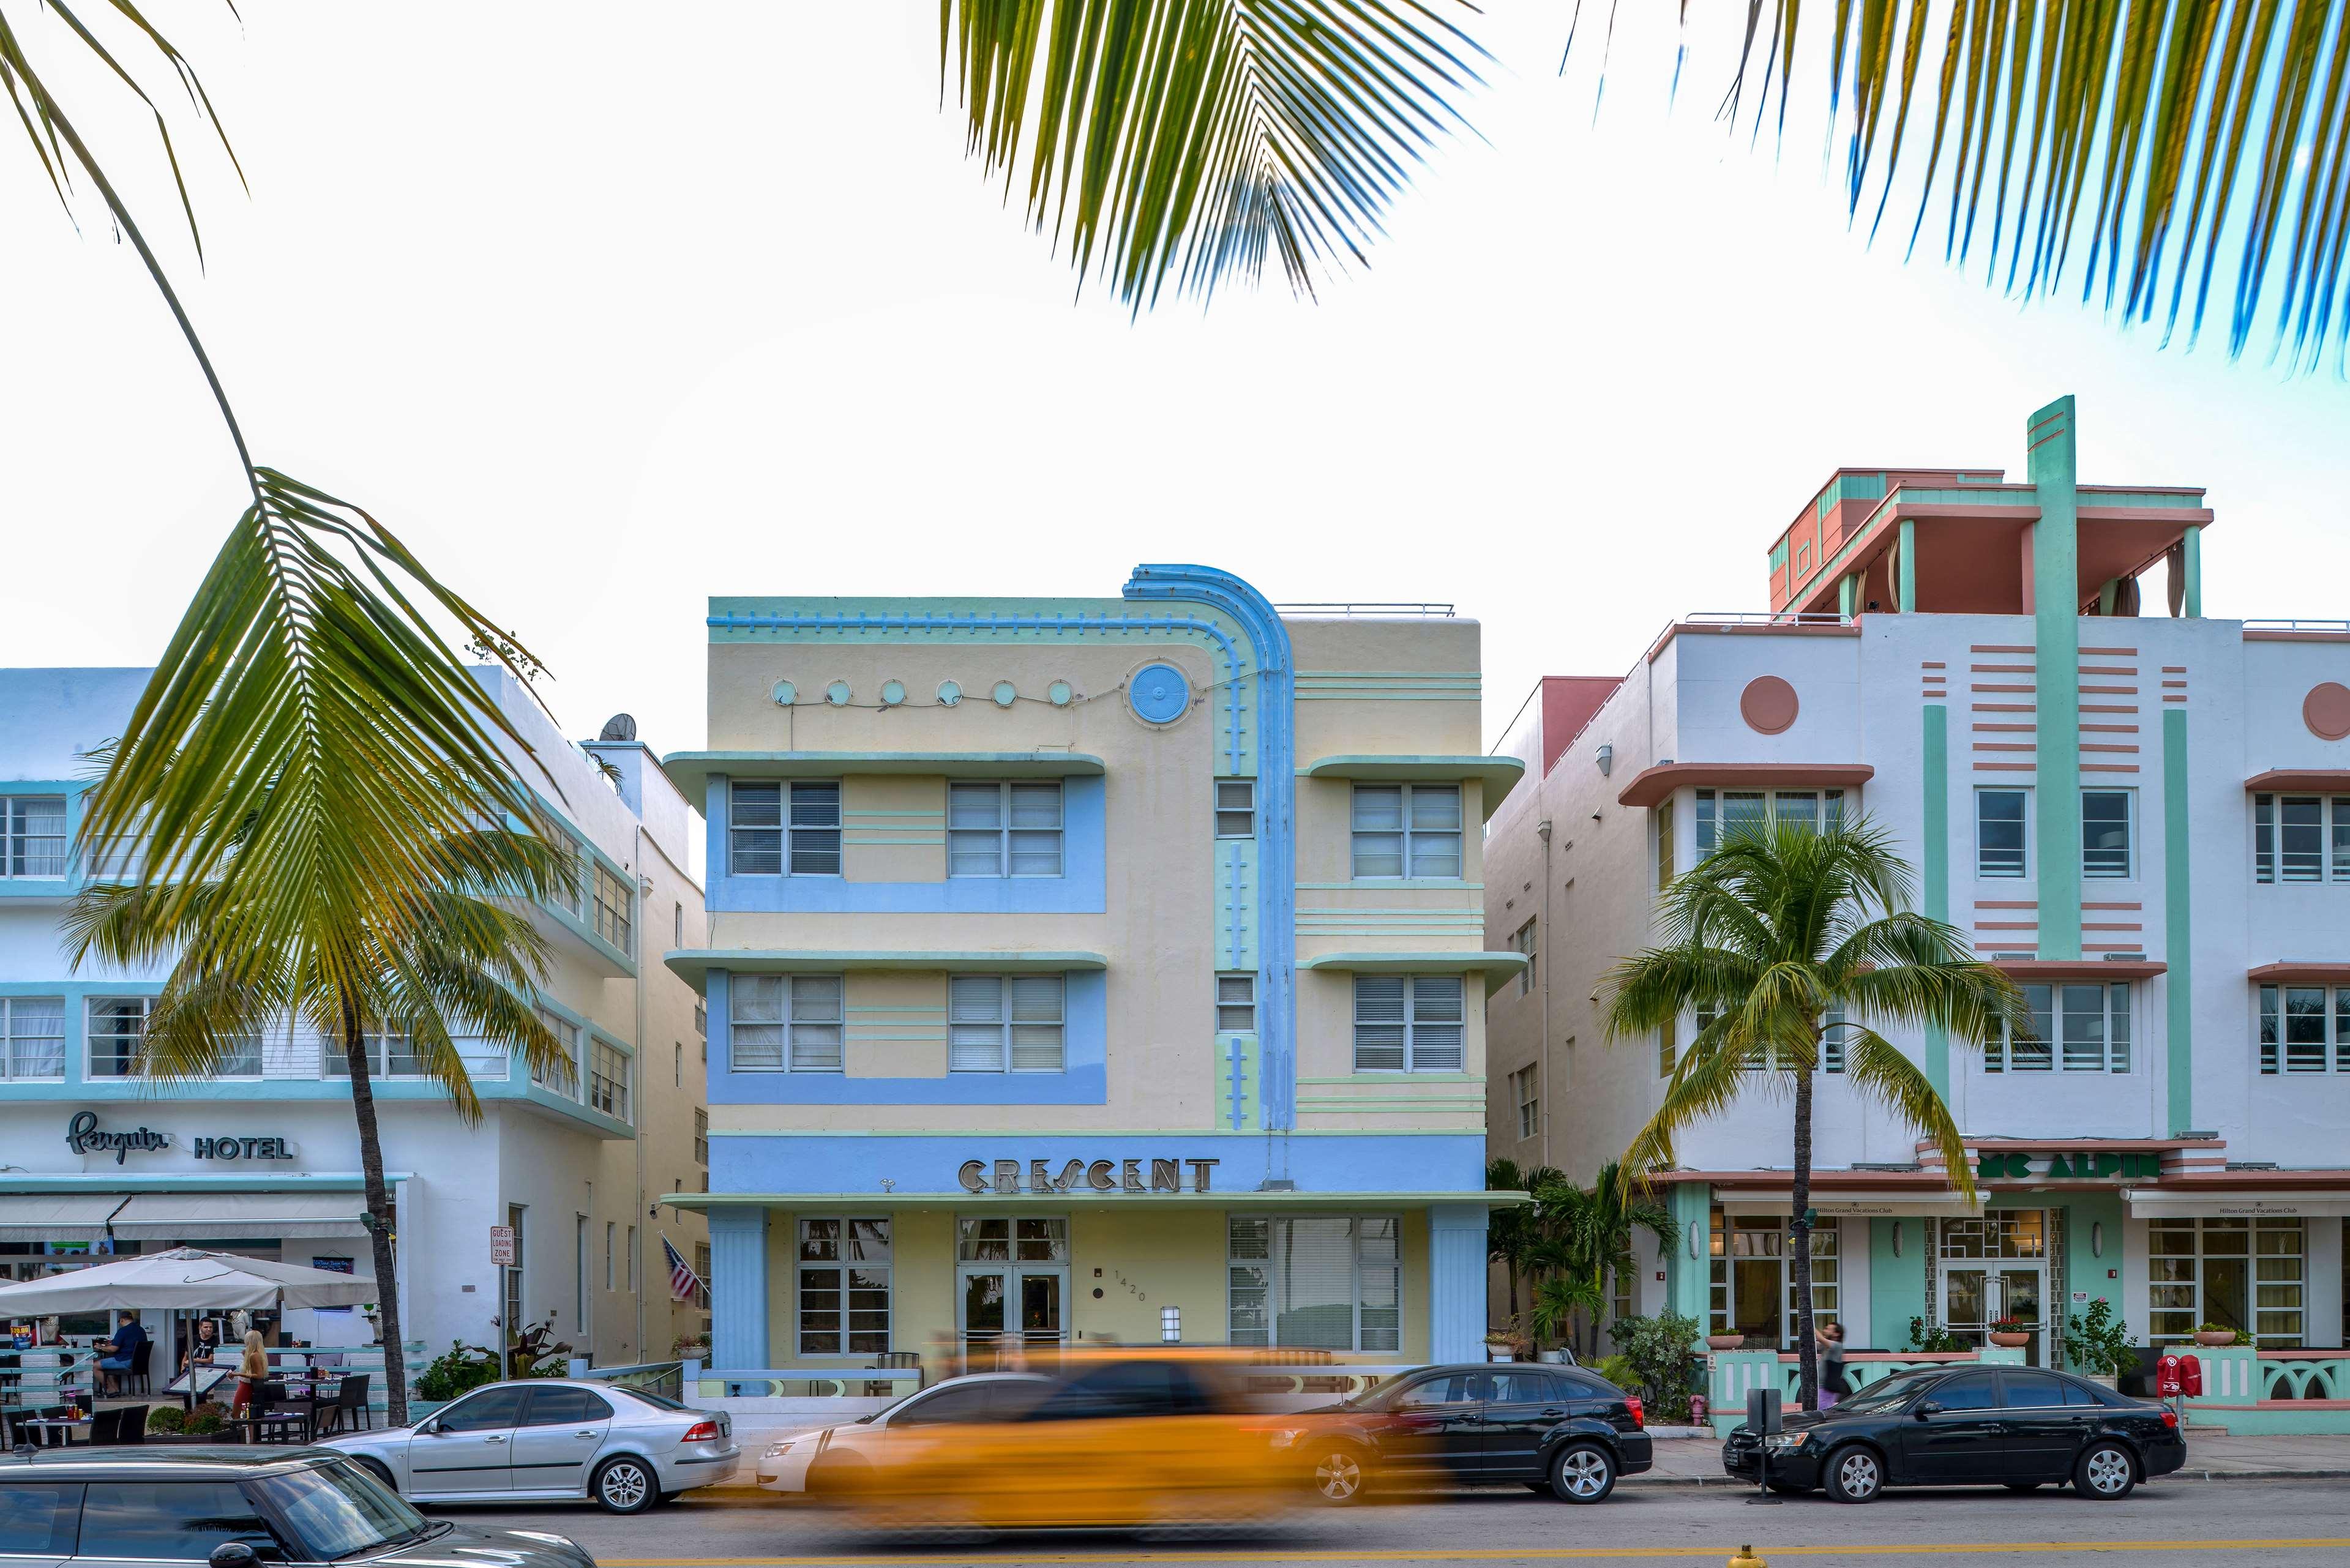 Hilton Vacation Club Crescent on South Beach Miami image